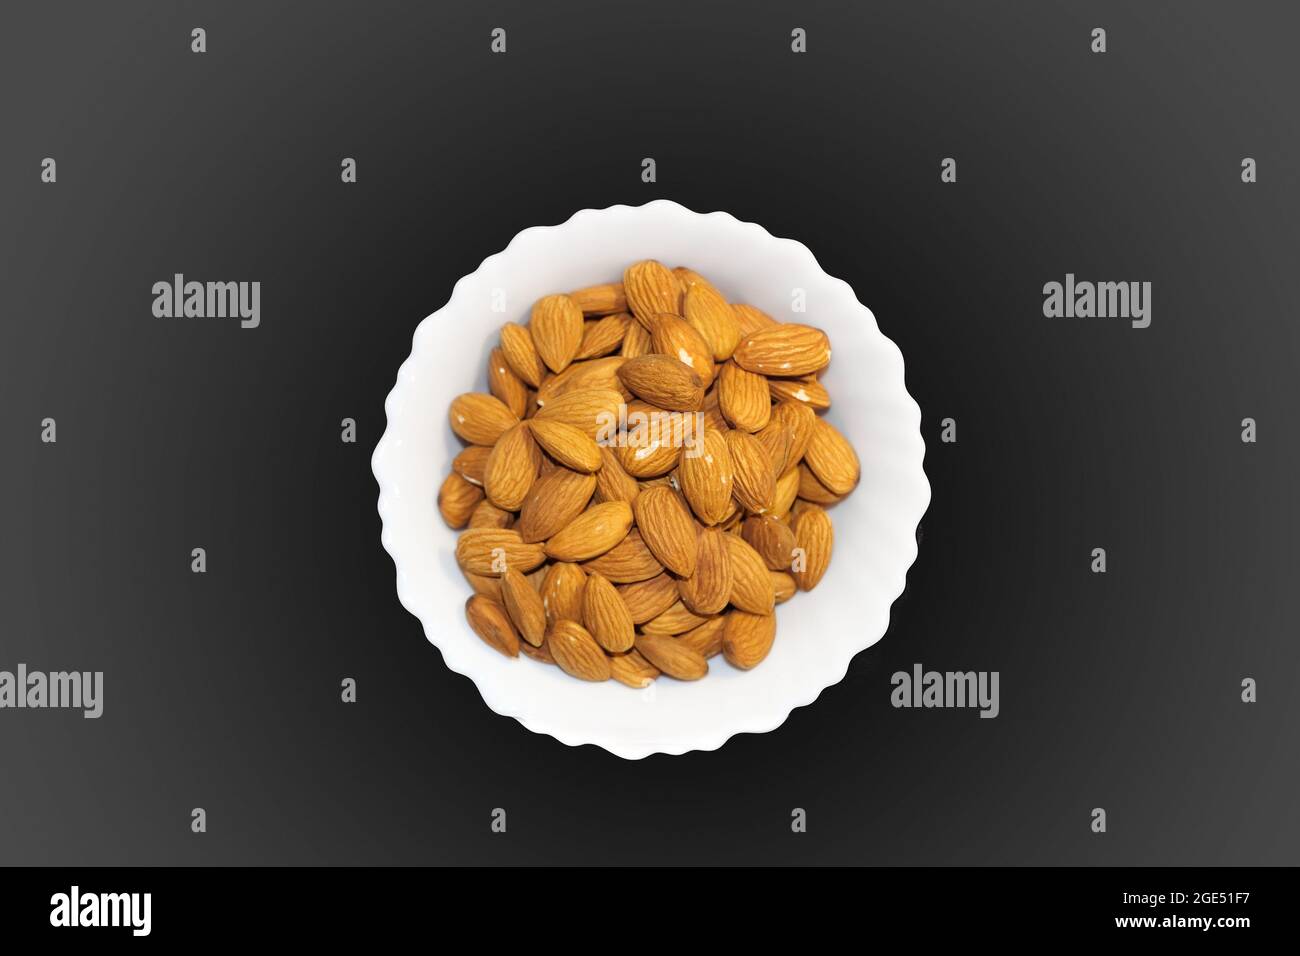 Closeup Image Of Almond Inside White Bowl. Grey Background Stock Photo